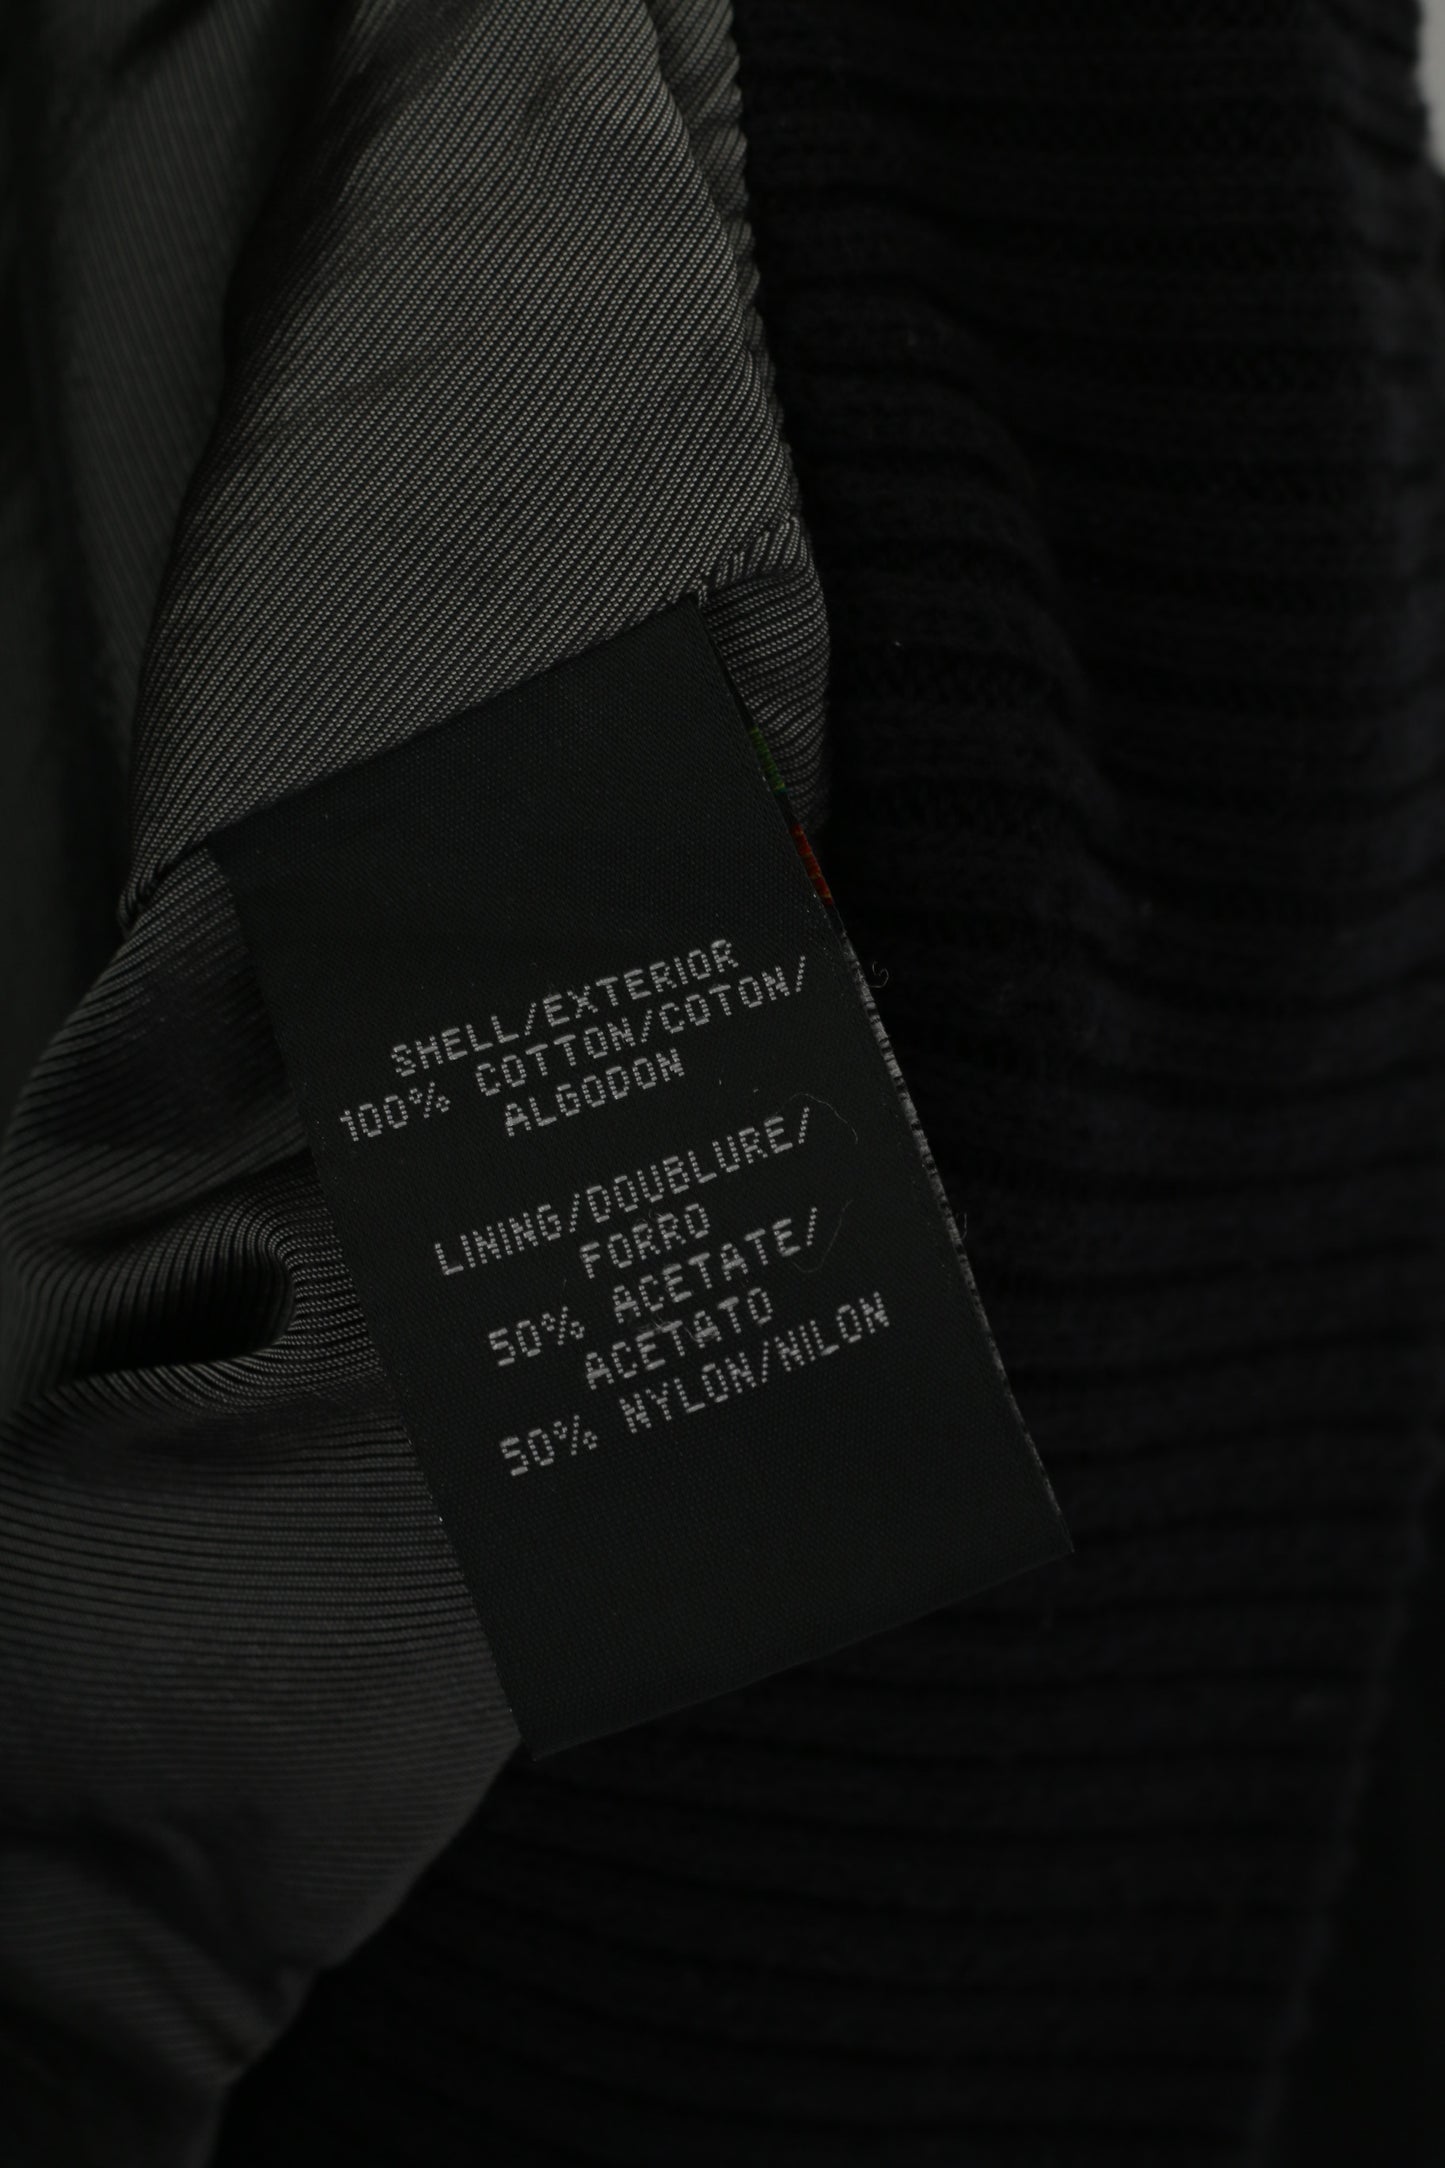 Kenneth Cole Men L Jacket Black Cotton Denim Full Zipper Multi Pockets Casual Top